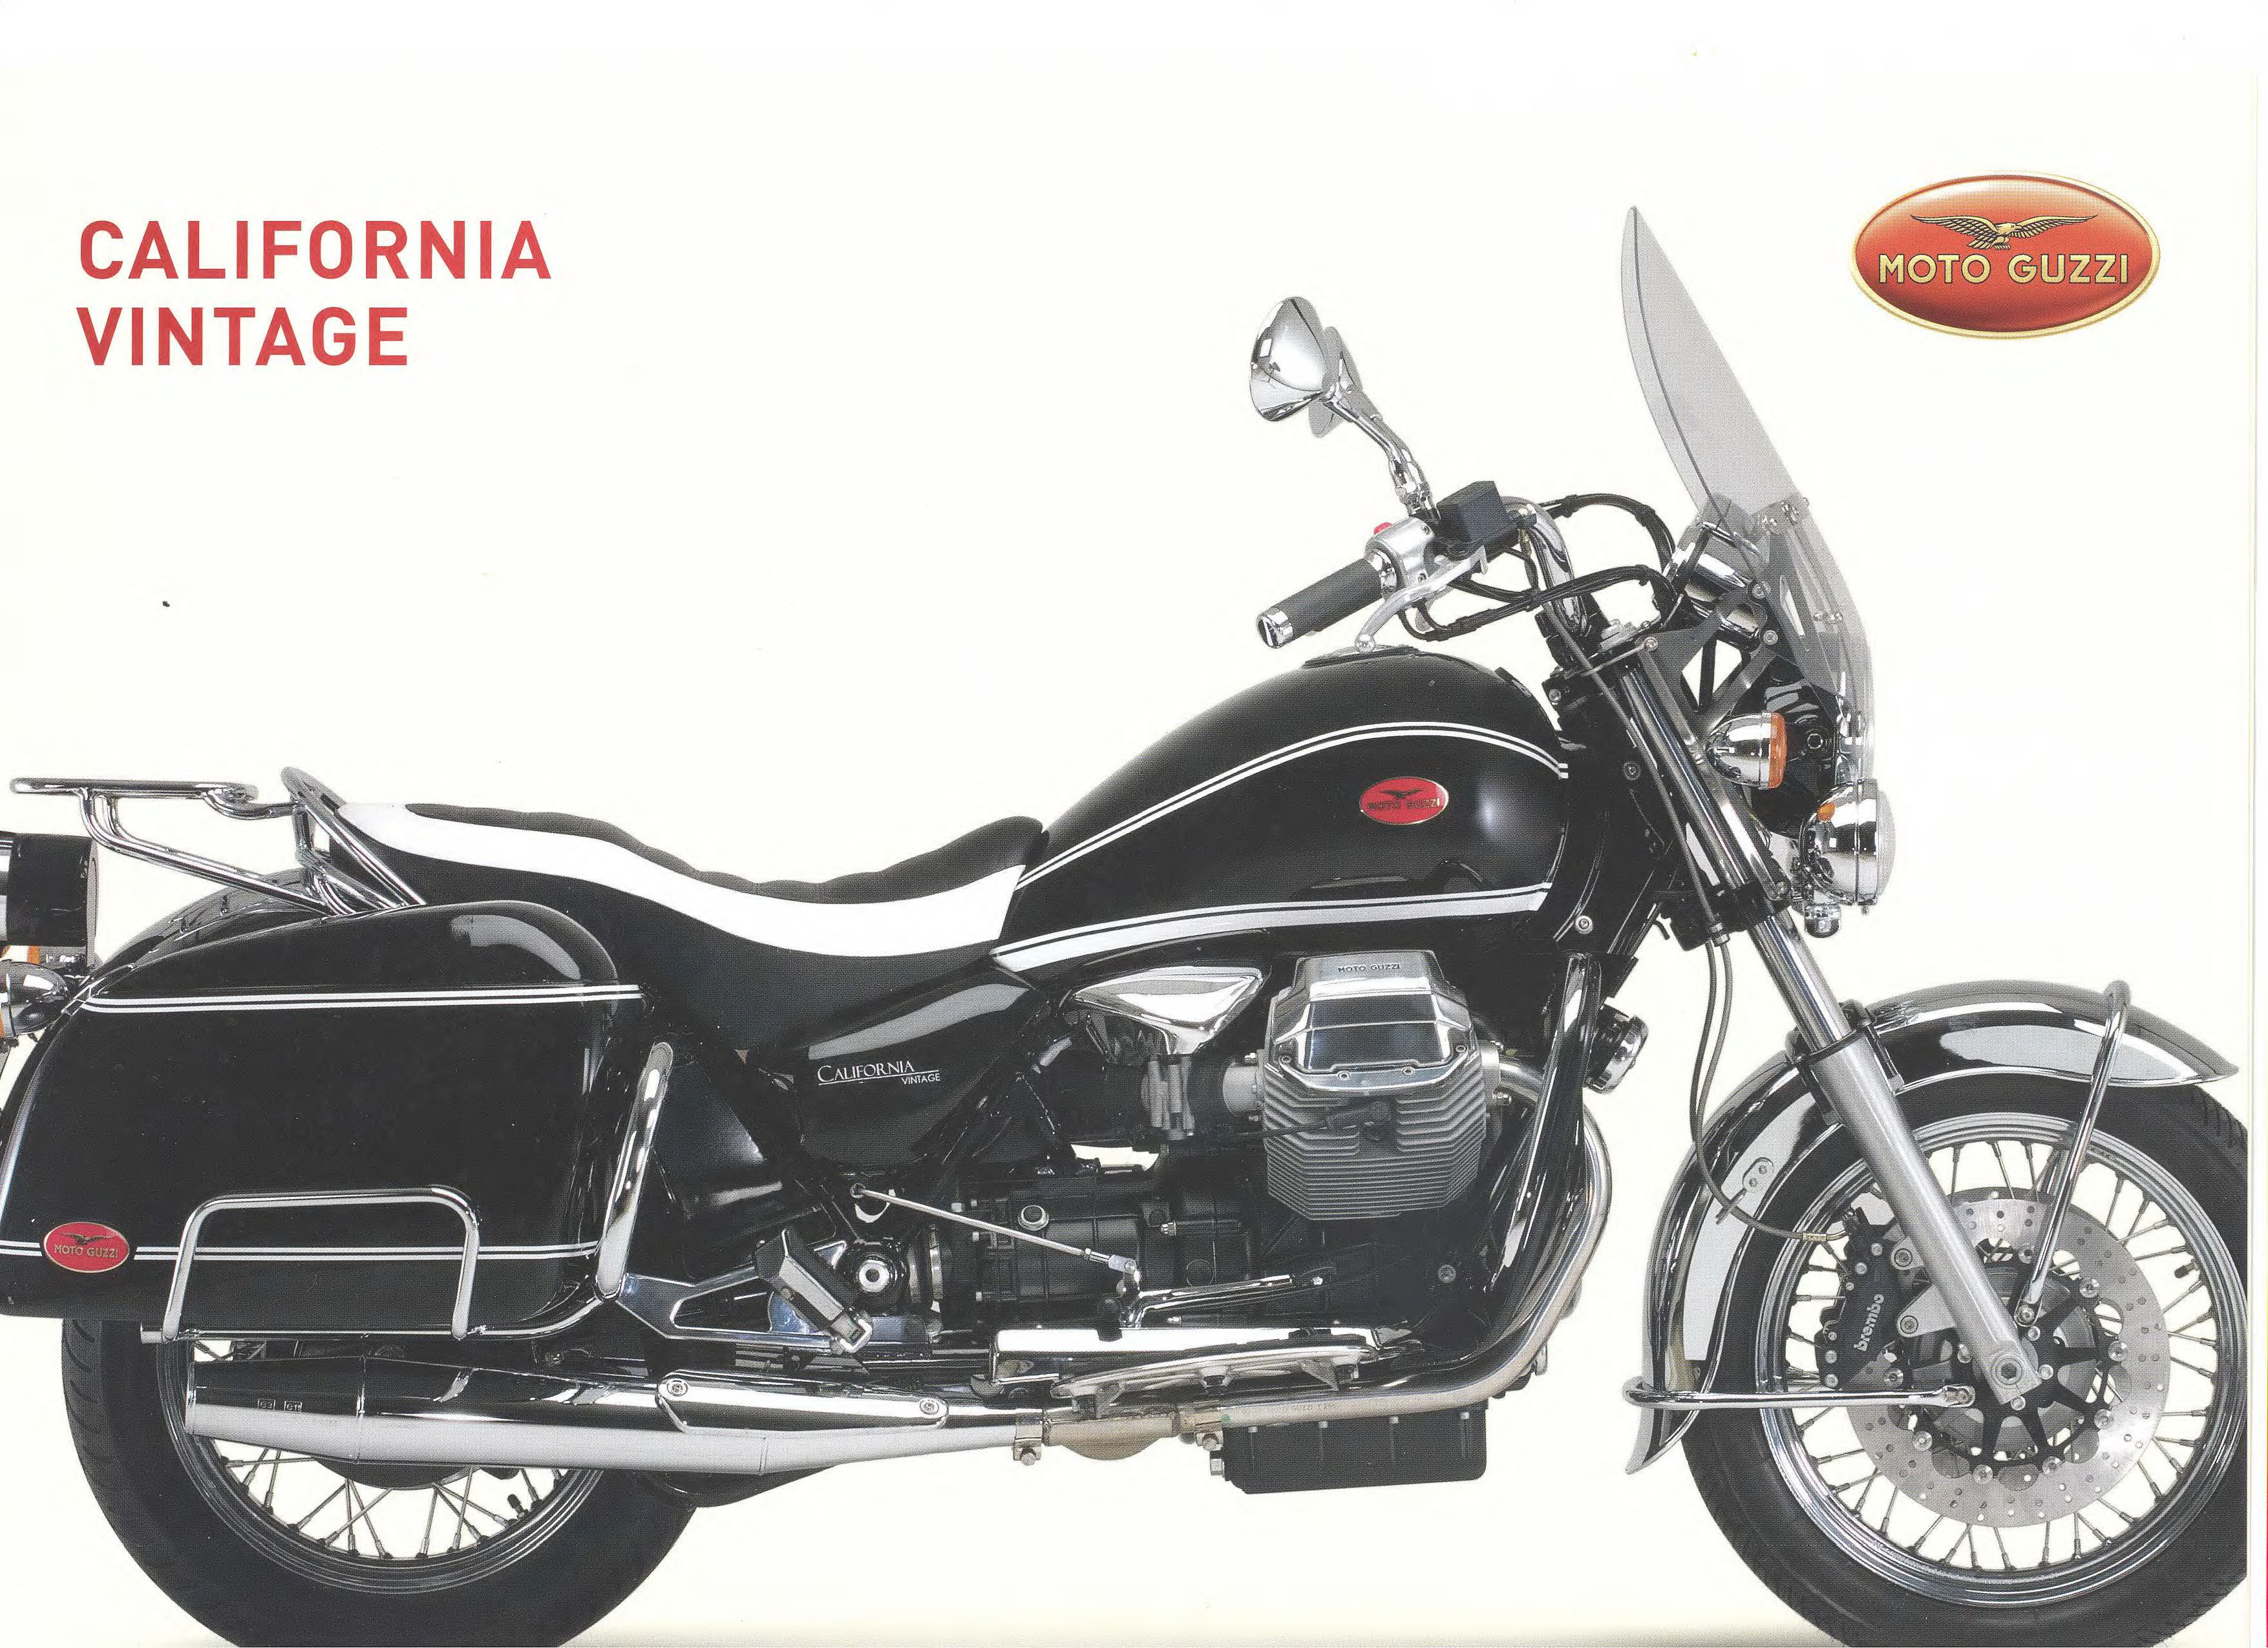 Moto Guzzi factory brochure: California Vintage